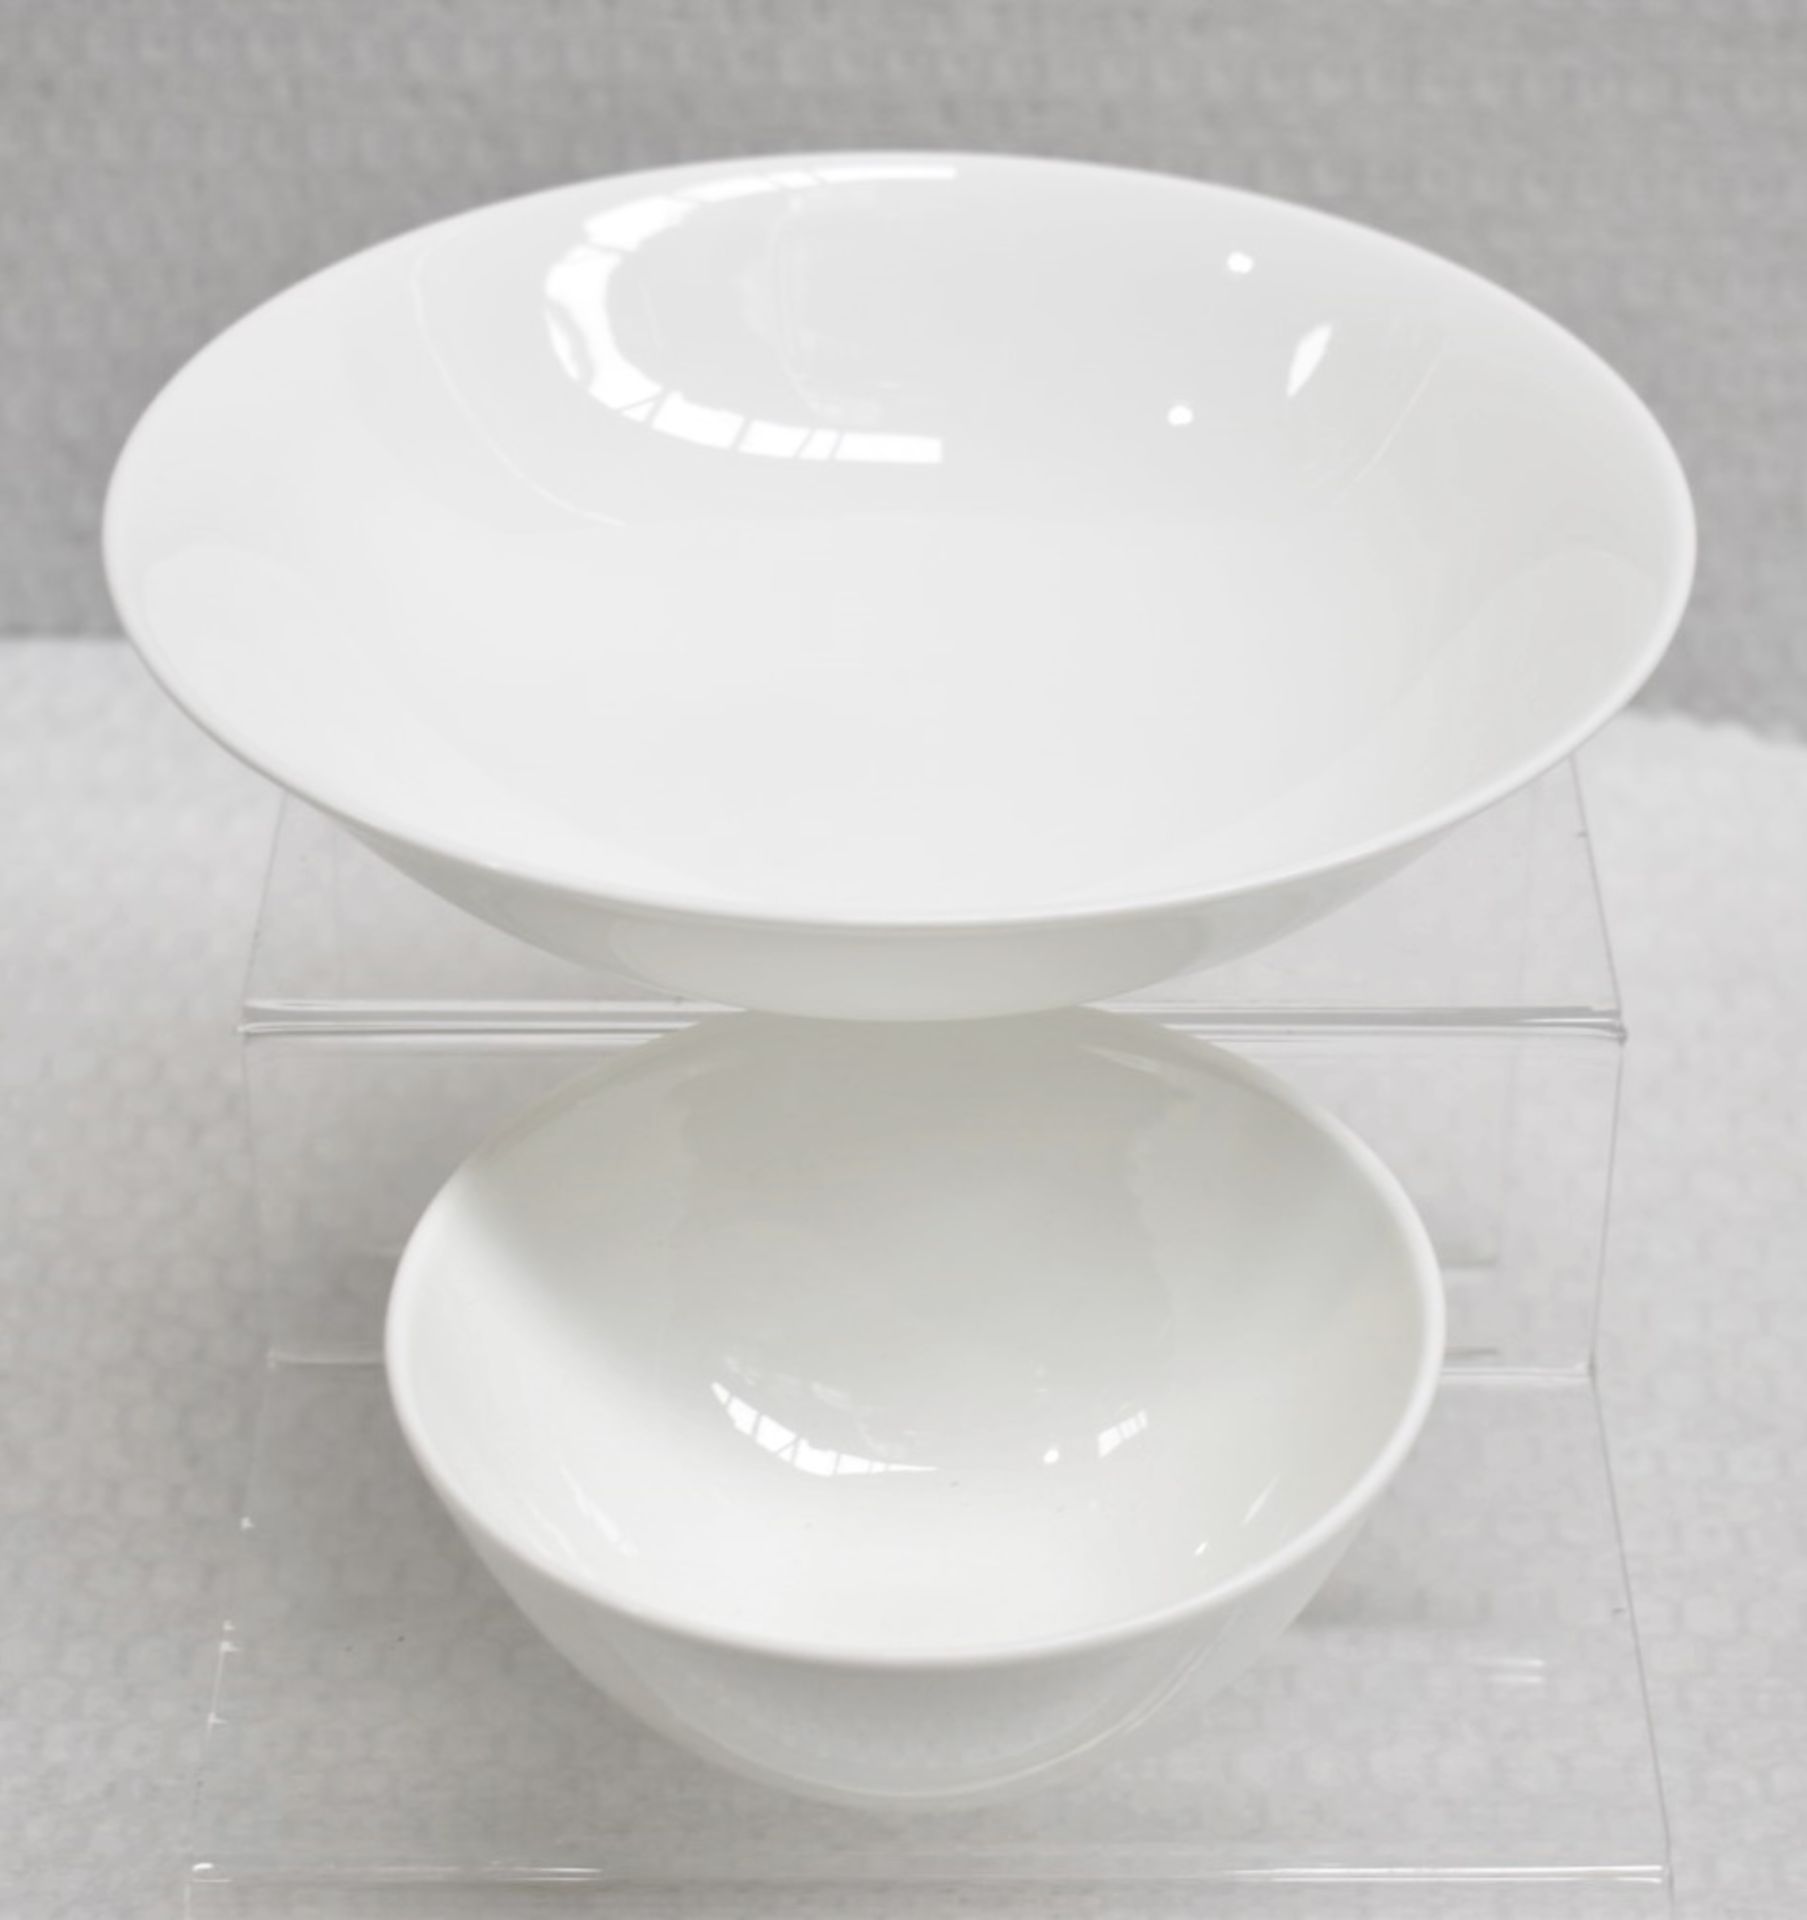 2 x WEDGWOOD / VERA WANG 'Perfect White' Fine Bone China Nesting Bowls - Unused Boxed Stock - Ref: - Image 3 of 7